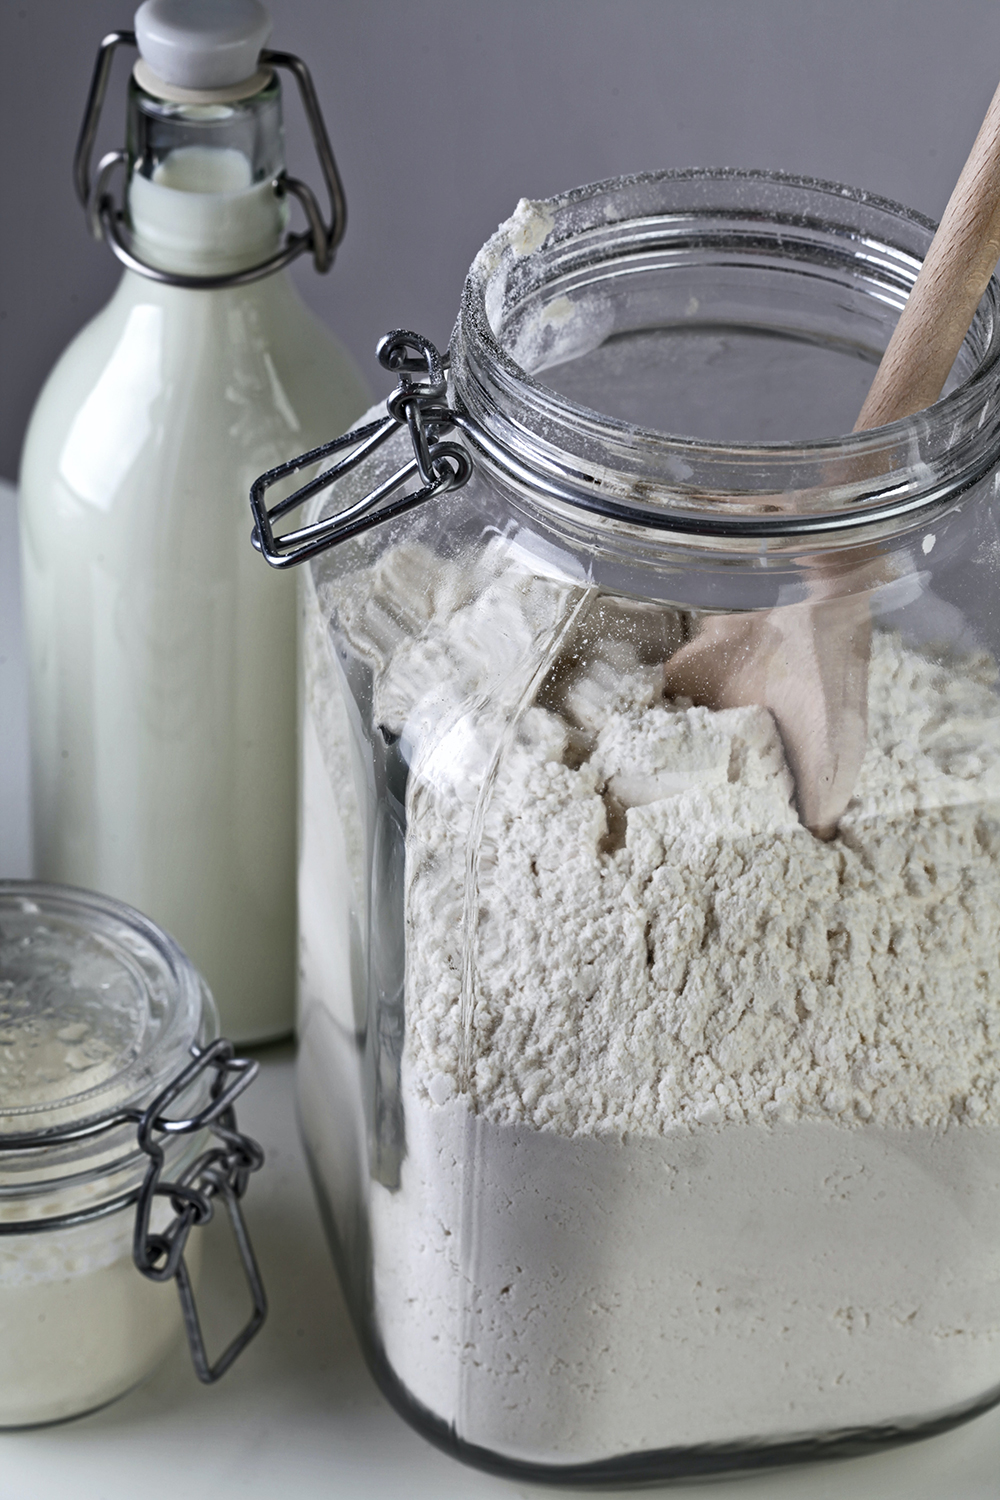 Measuring Eden Valley biodynamic flour ready to make the Bread Maker Loaf recipe